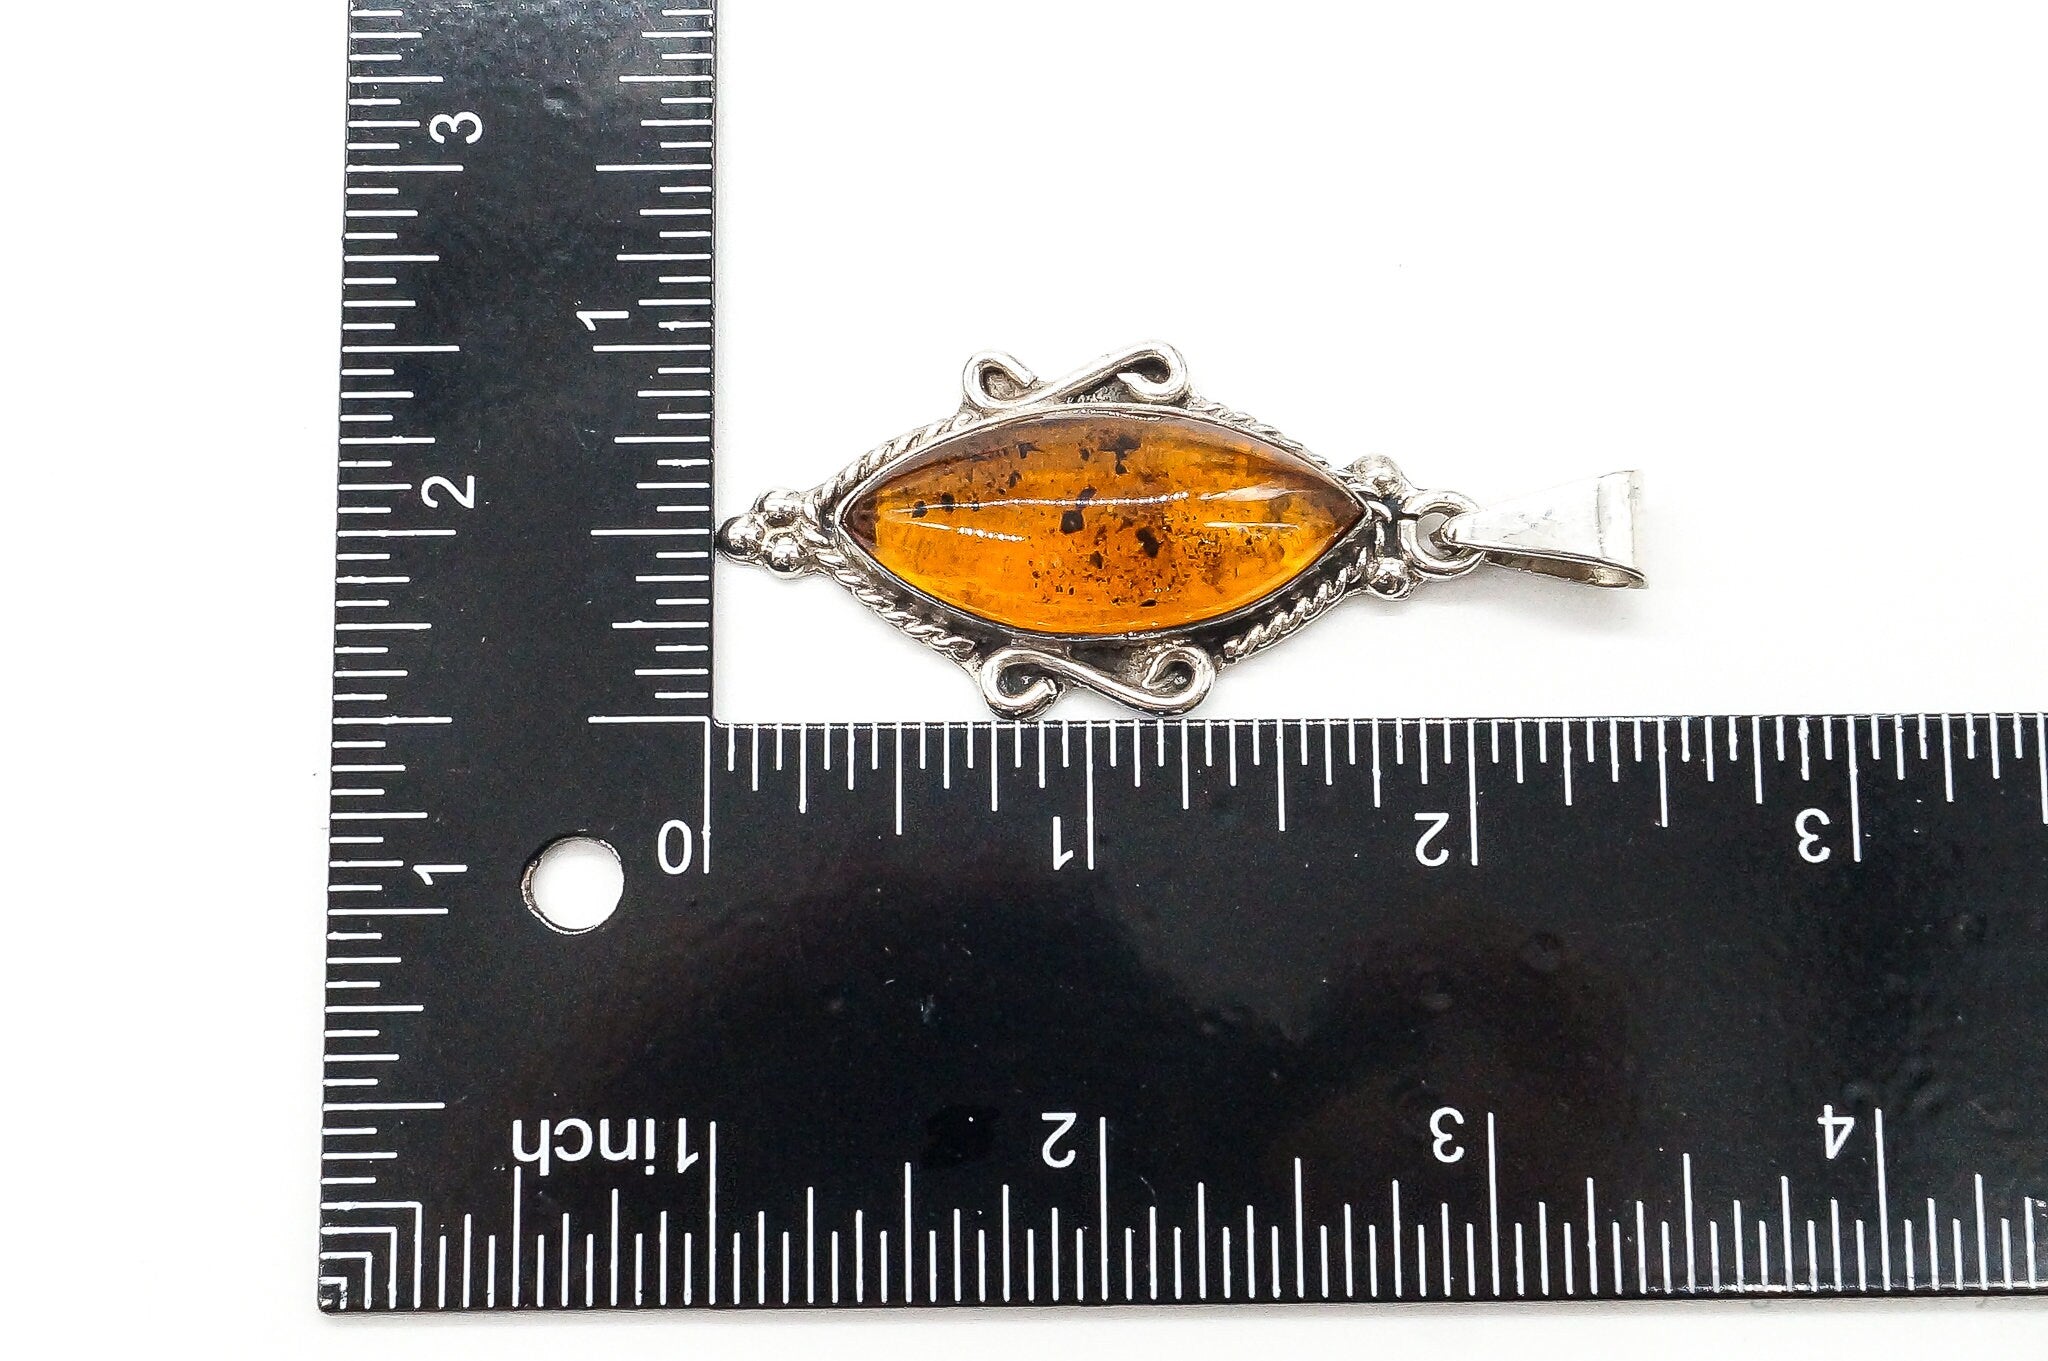 Large Vintage Baltic Amber Sterling Silver Necklace Pendant